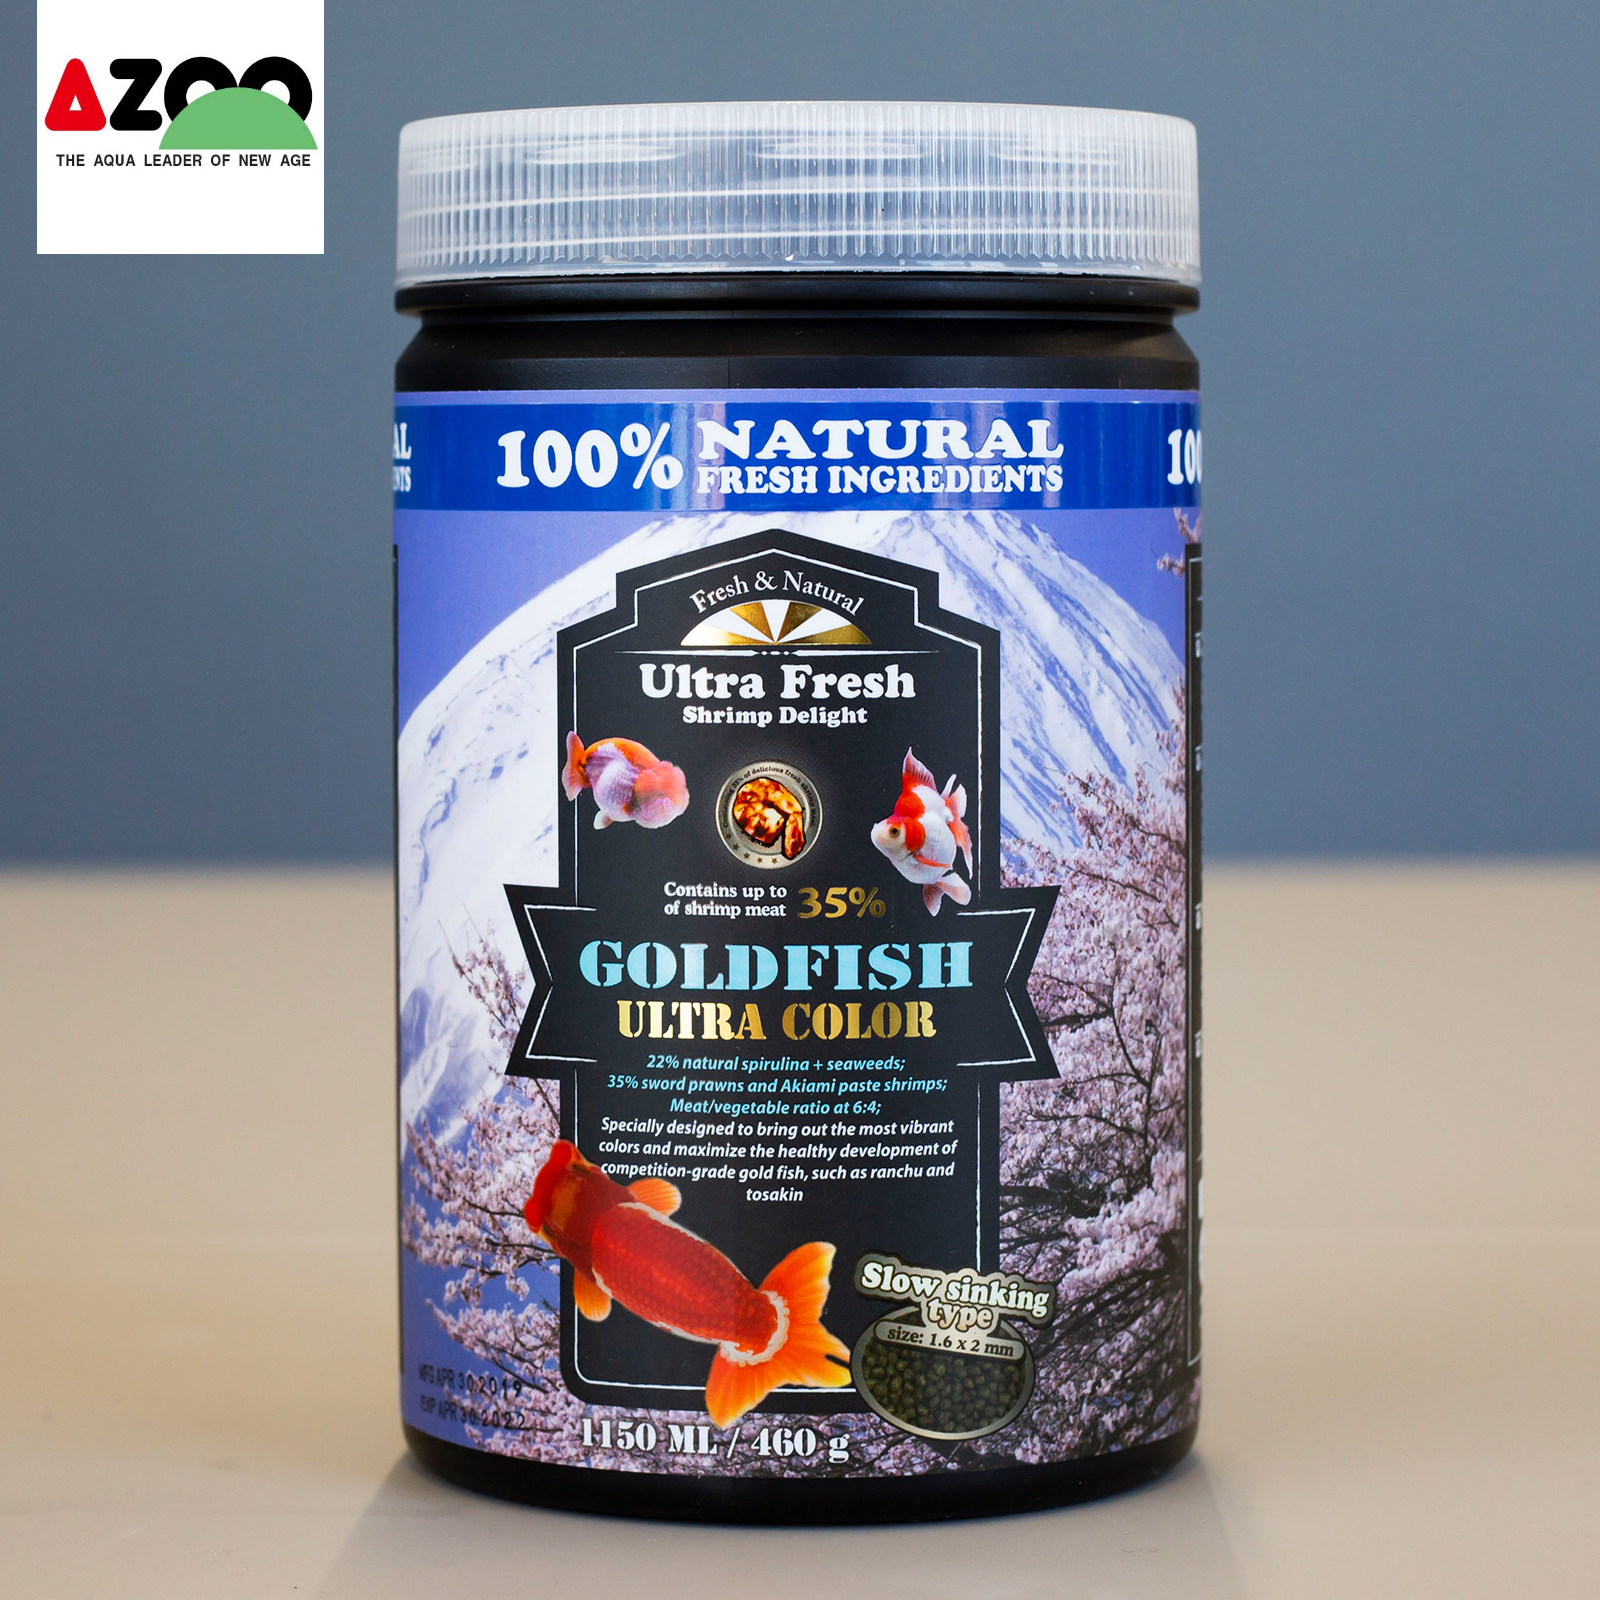 AZOO Goldfish Ultra Color 1150ml/460g